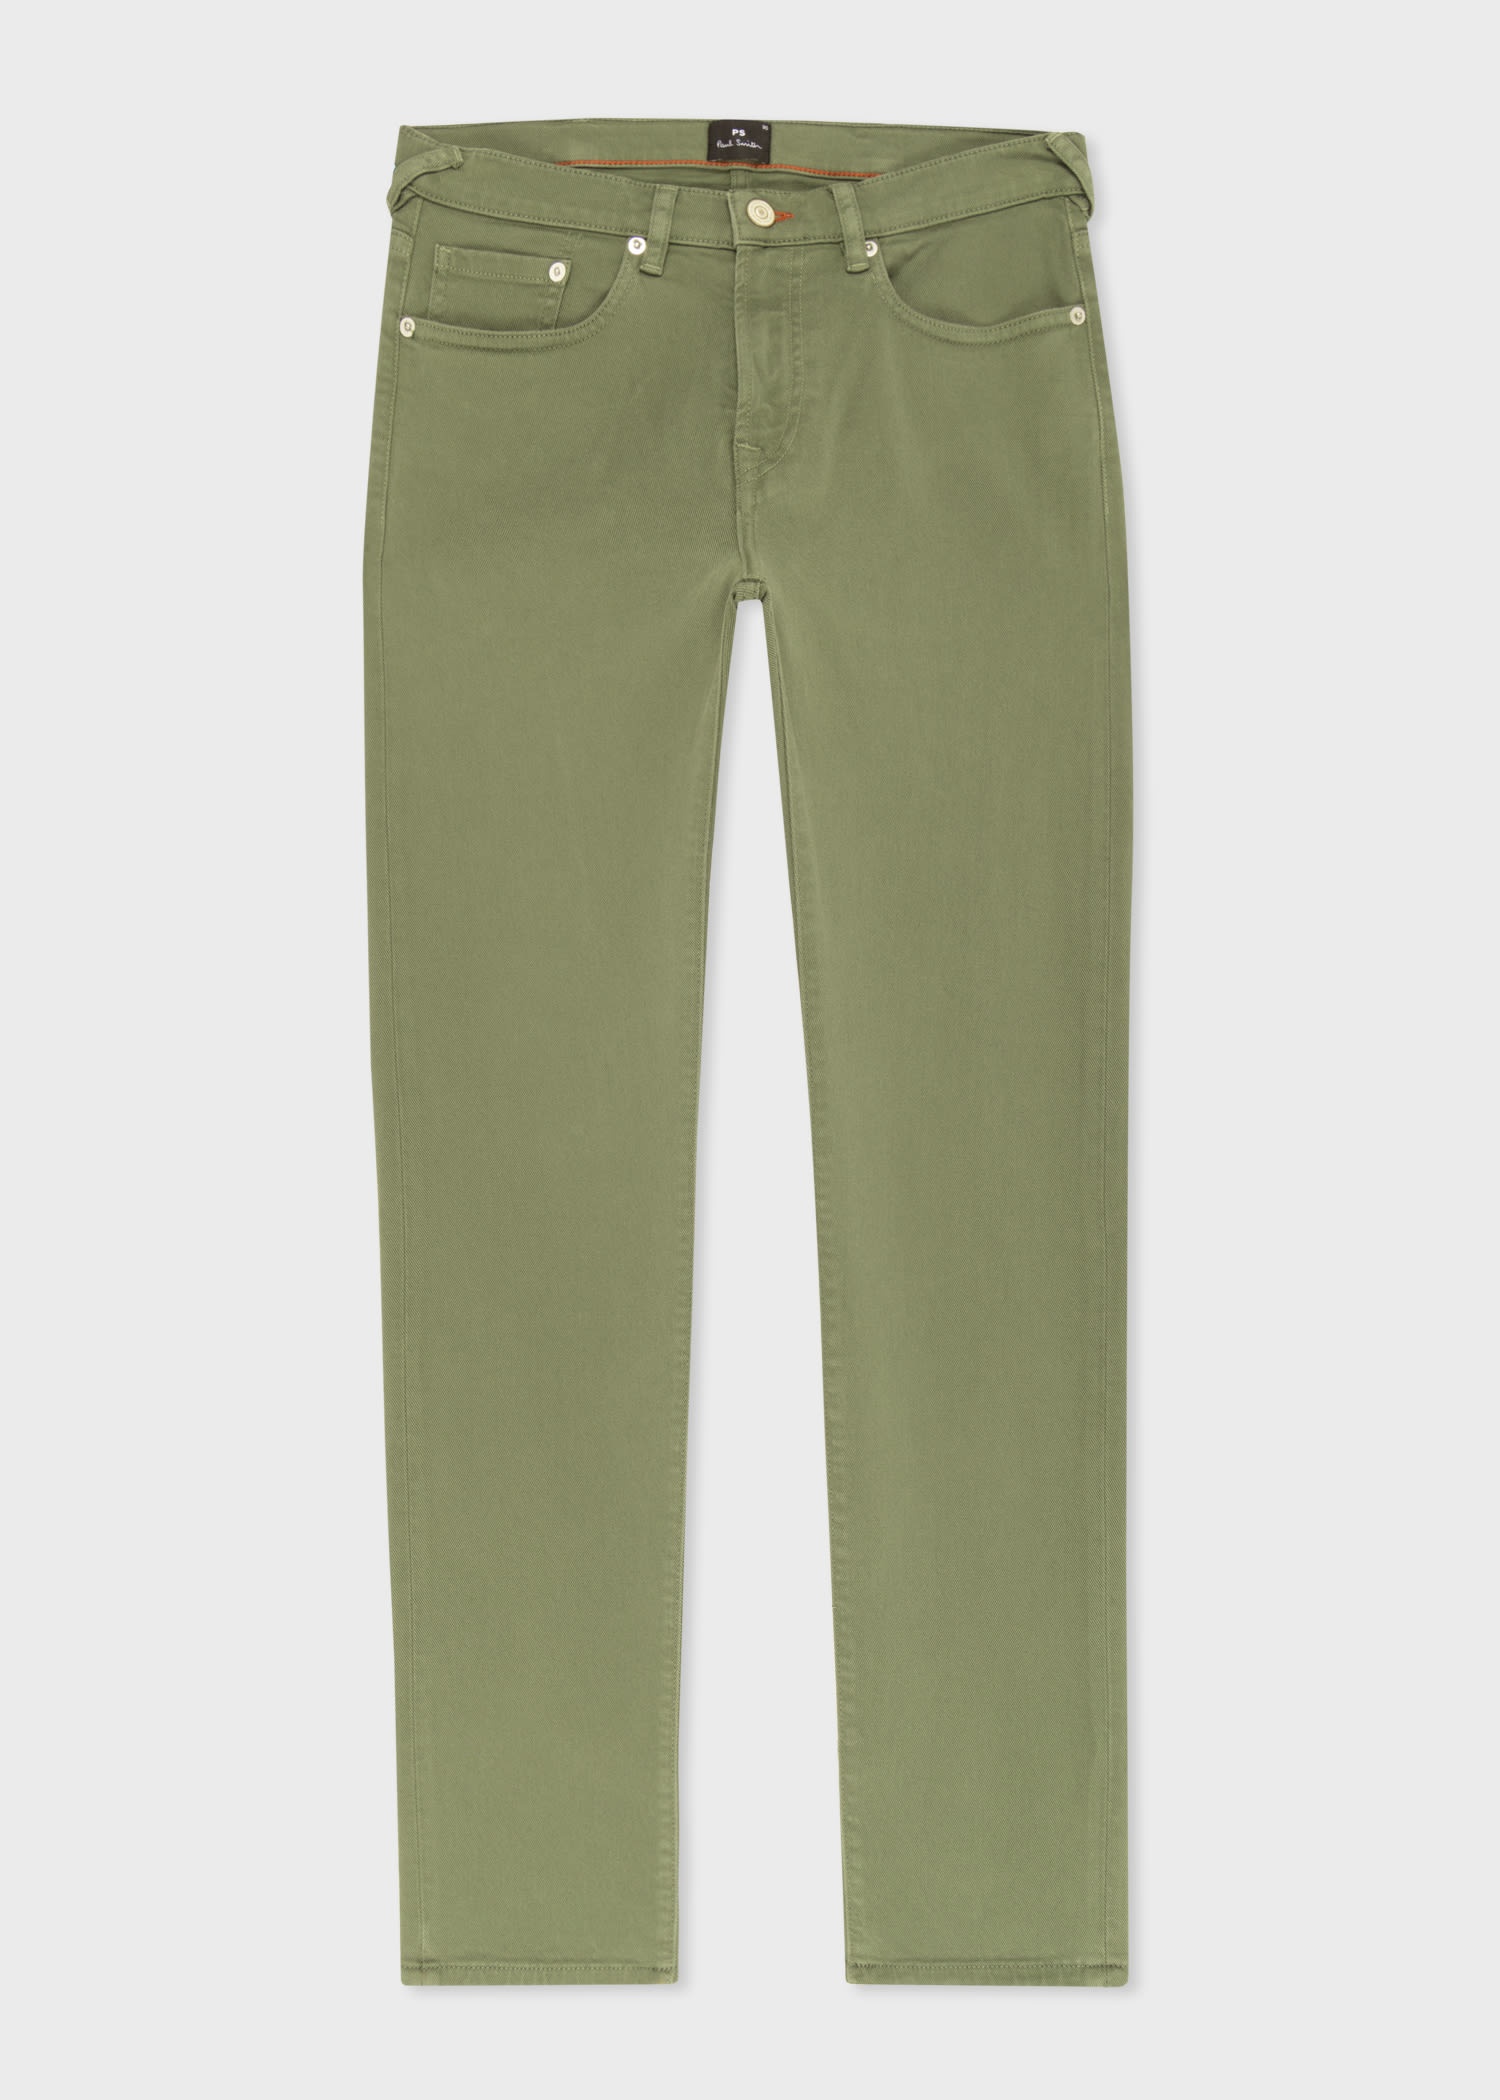 Khaki Green Garment-Dyed Jeans - 1